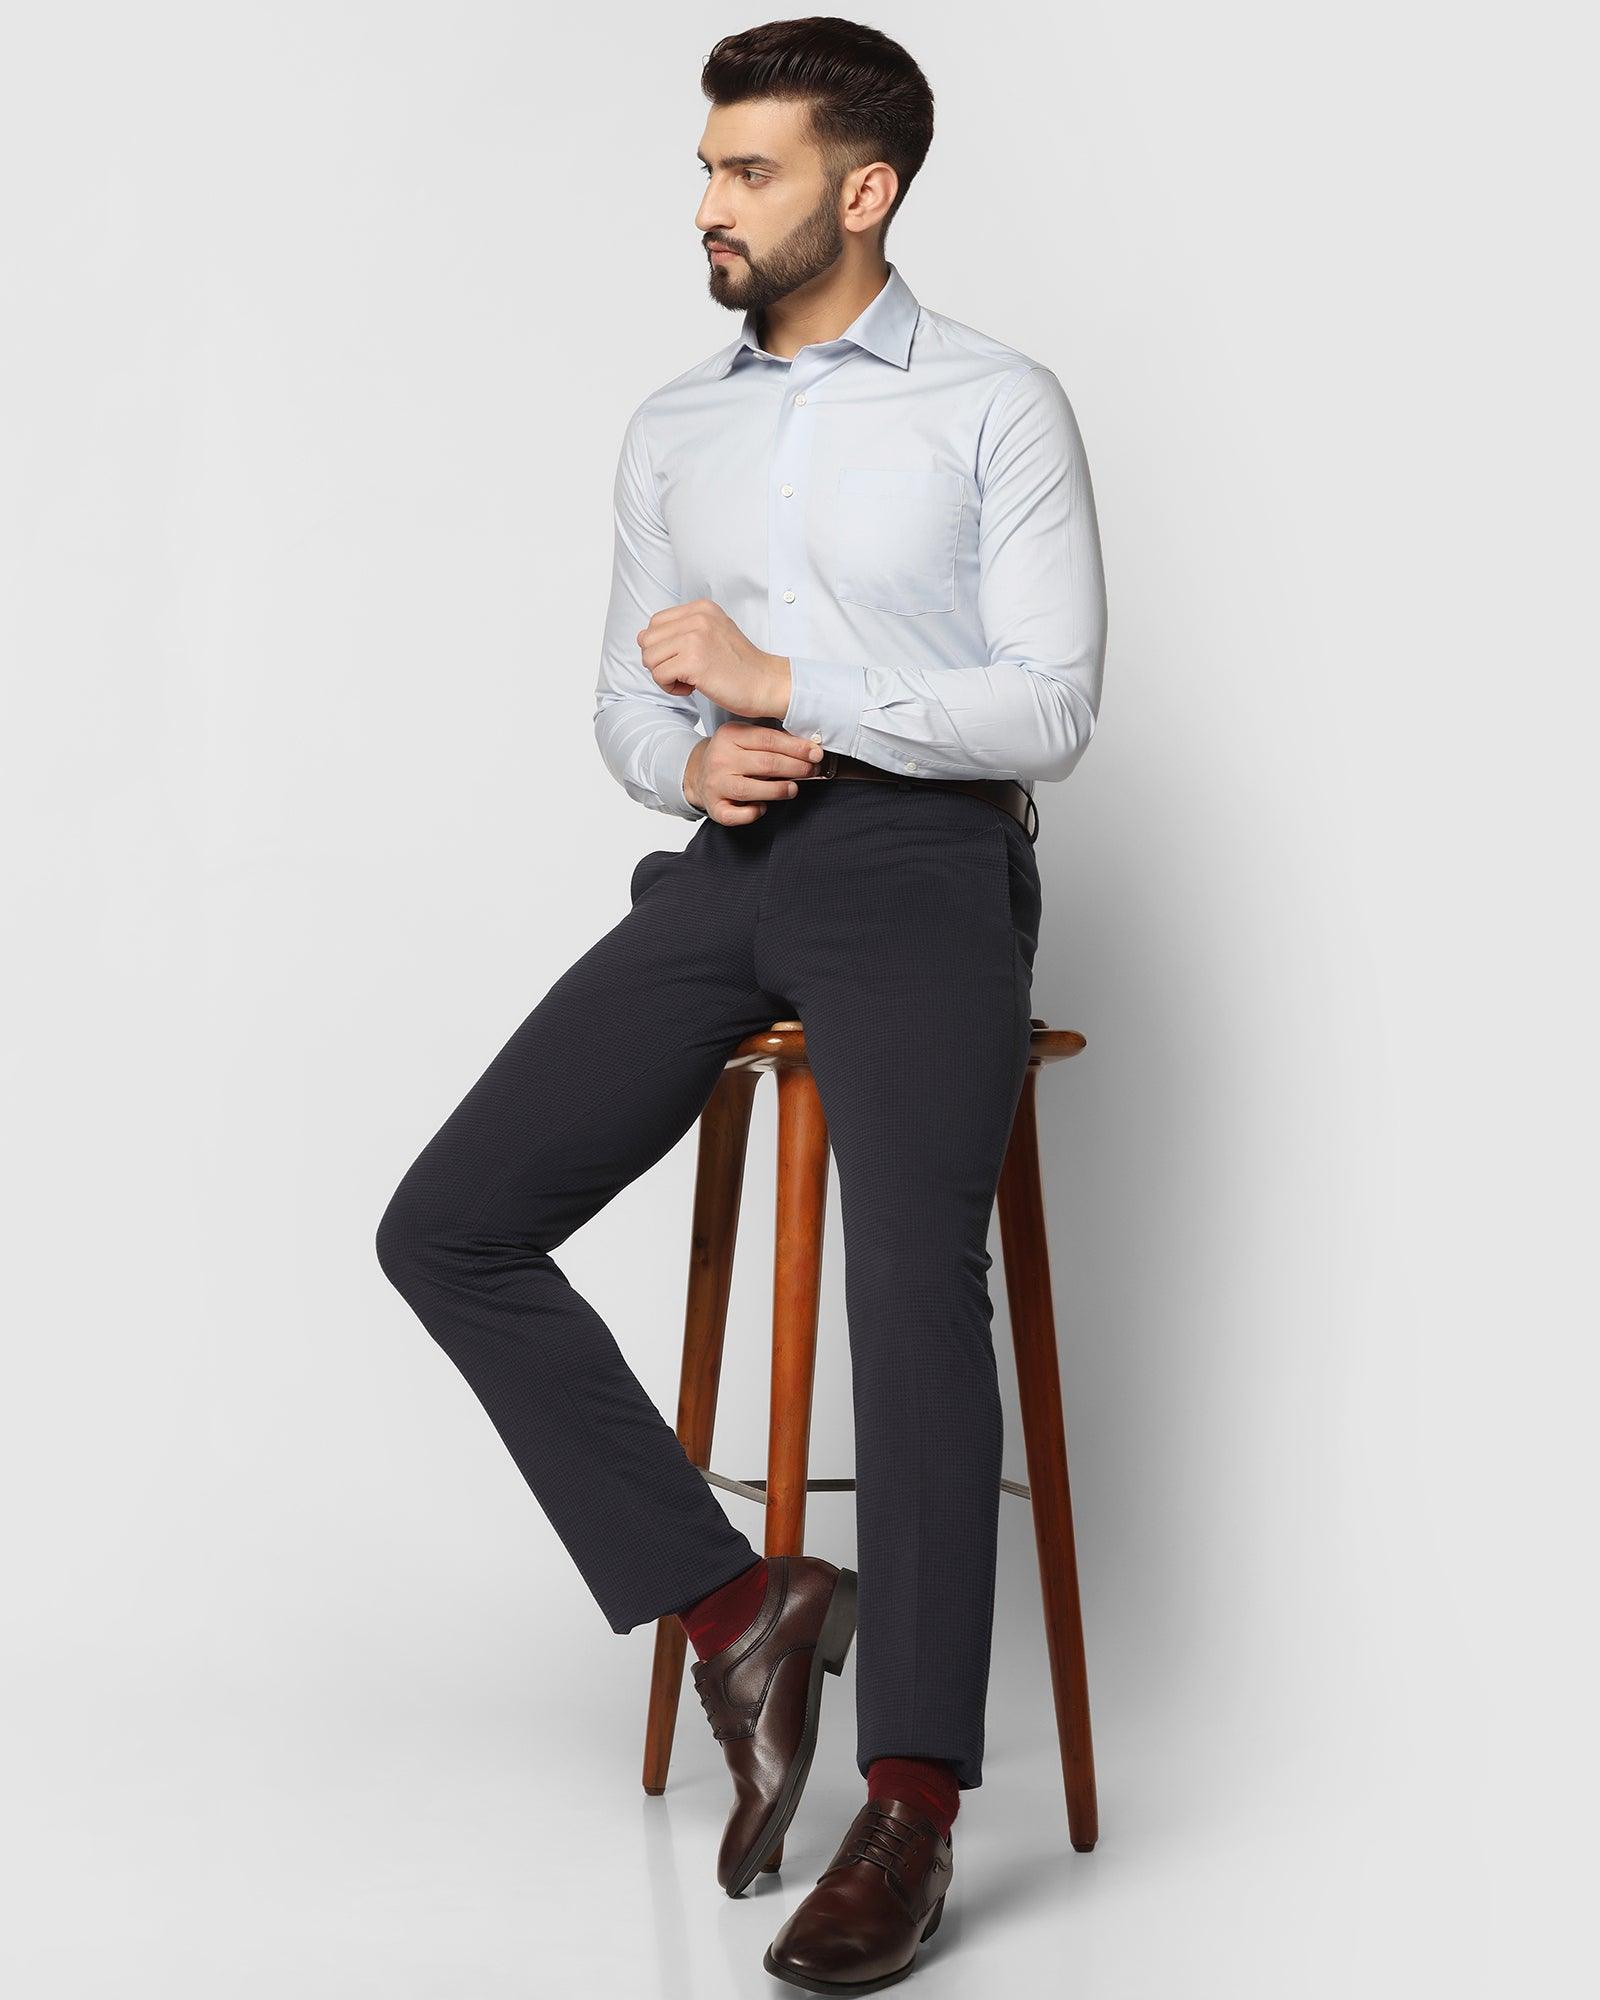 Top Trouser Summer Pants Sets Outdoor New In Men's Clothing Matching Cheap  Basic Sweatshirt Plain Elastic Casual Xl T Shirt Man - AliExpress